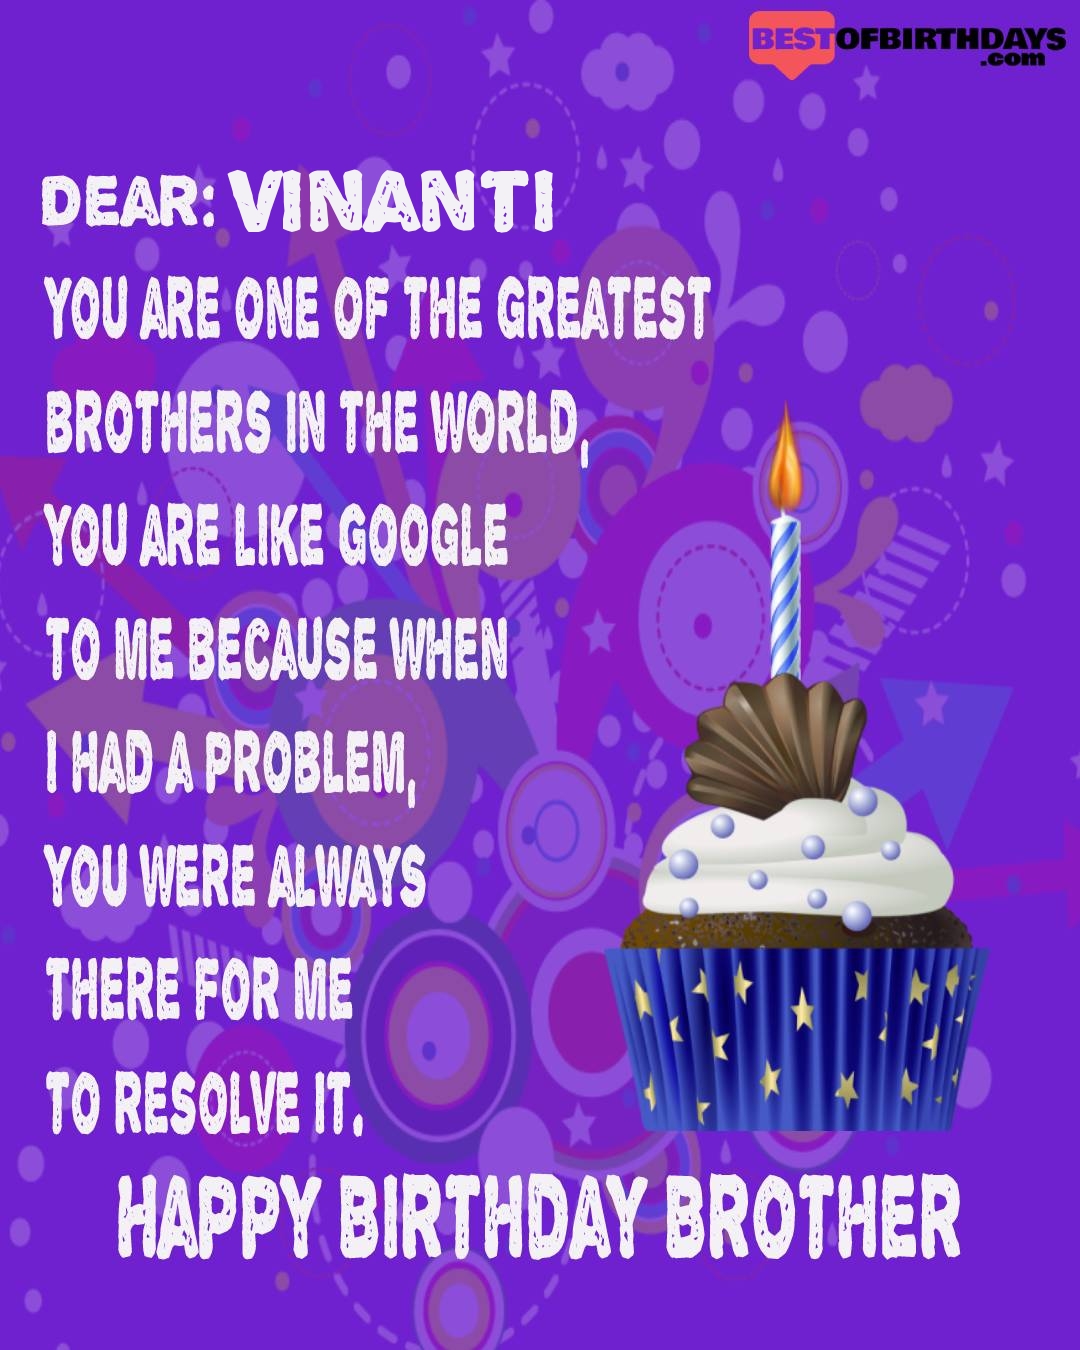 Happy birthday vinanti bhai brother bro